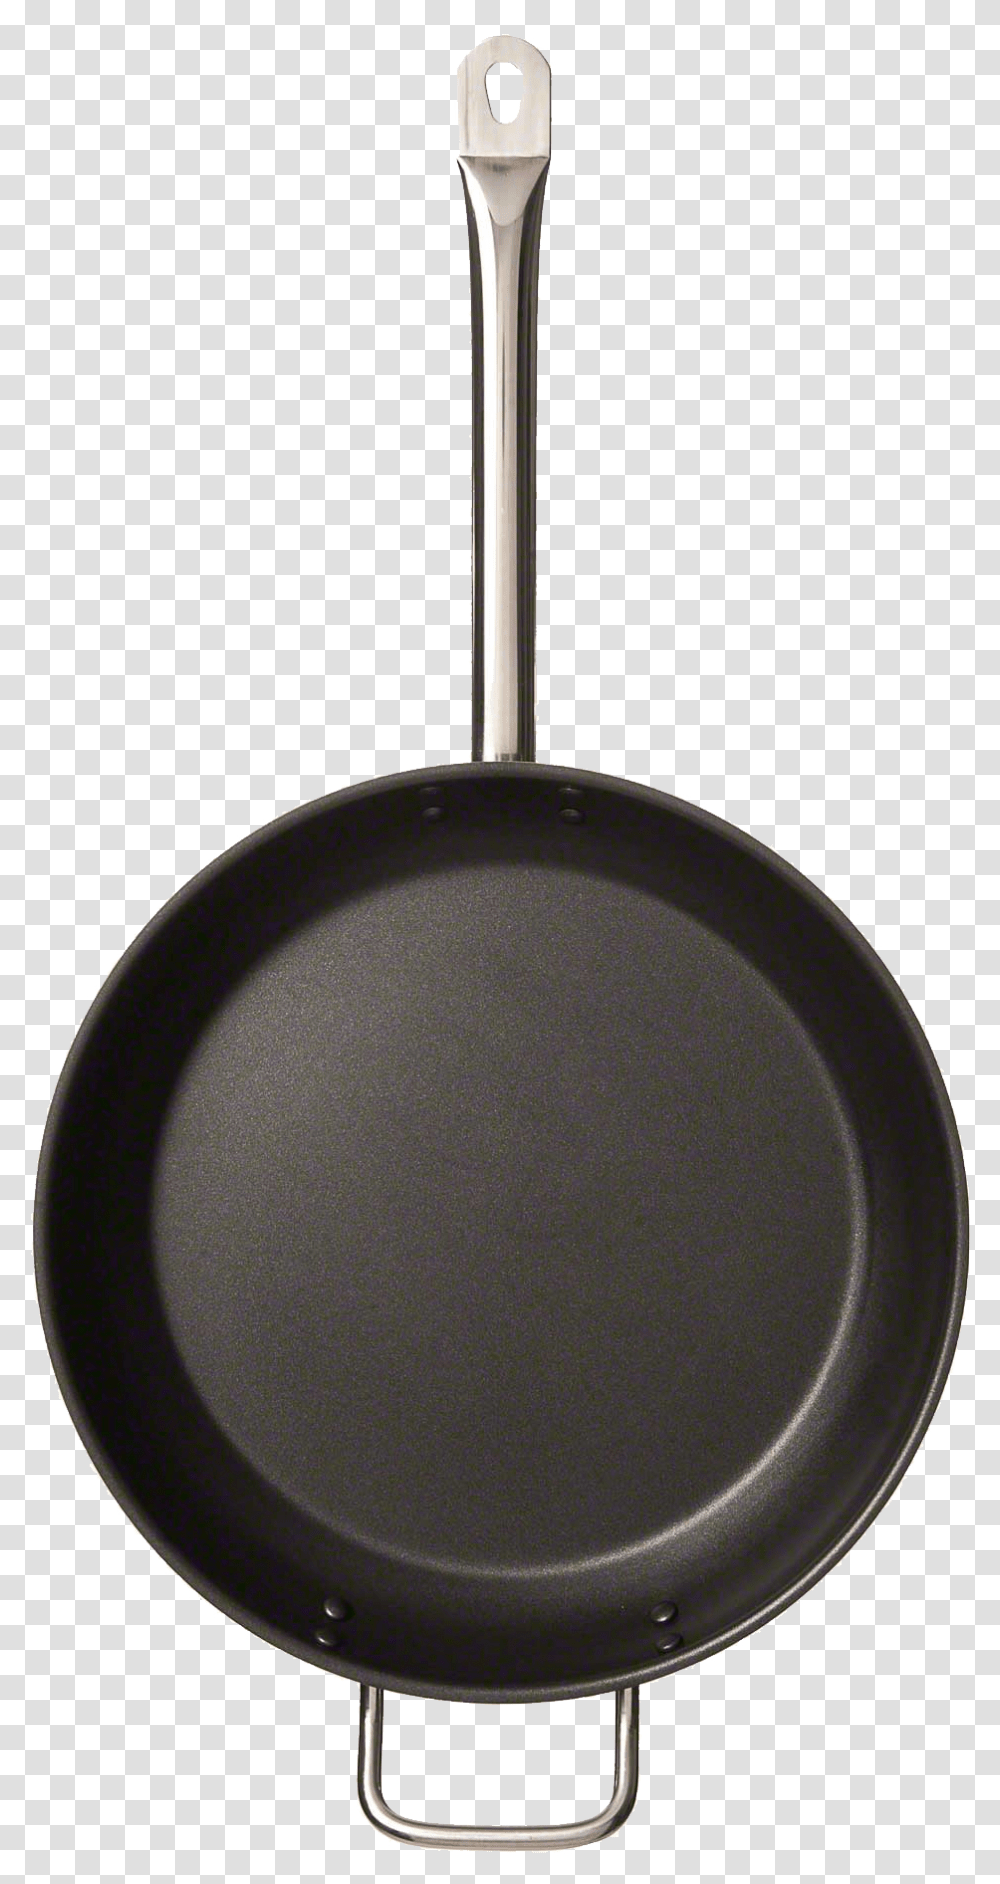 Frying Pan Top View, Wok, Lamp, Spoon, Cutlery Transparent Png